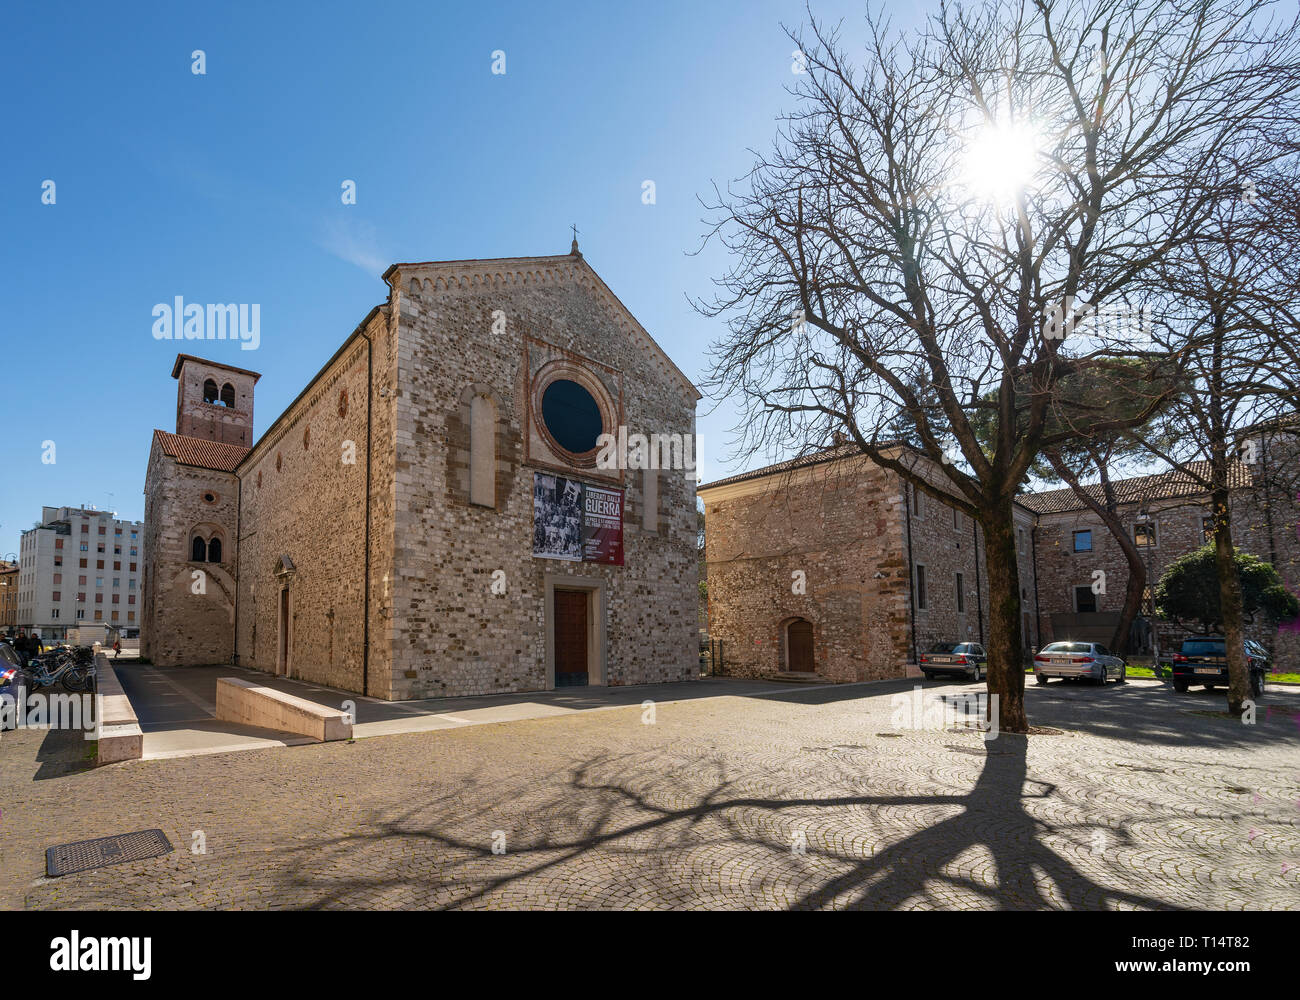 Udine, Friuli Venezia Giulia region, Italy. March 22 2019.   The church of San Francesco, one of the oldest religious buildings in Udine, now desecrat Stock Photo